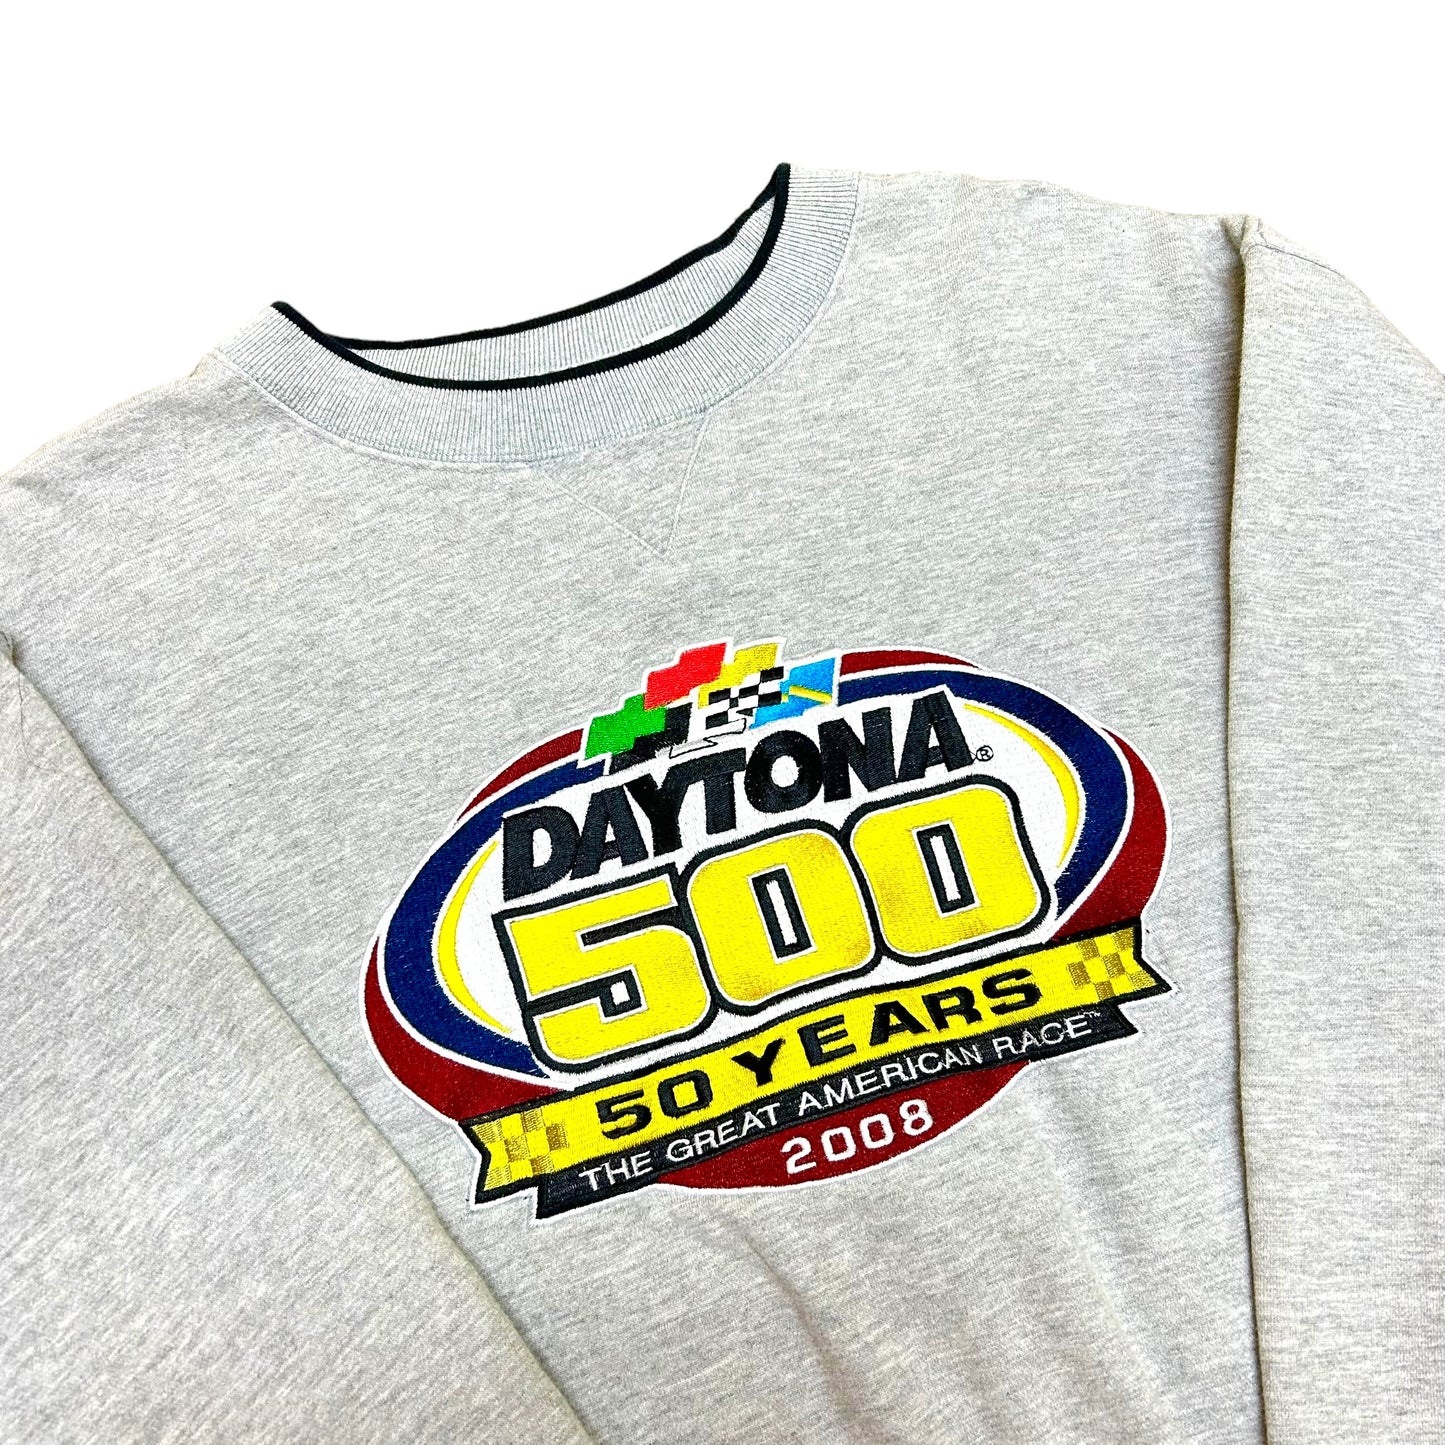 Late 2000s Daytona 500 Grey Embroidered Crewneck Sweatshirt - Size Large